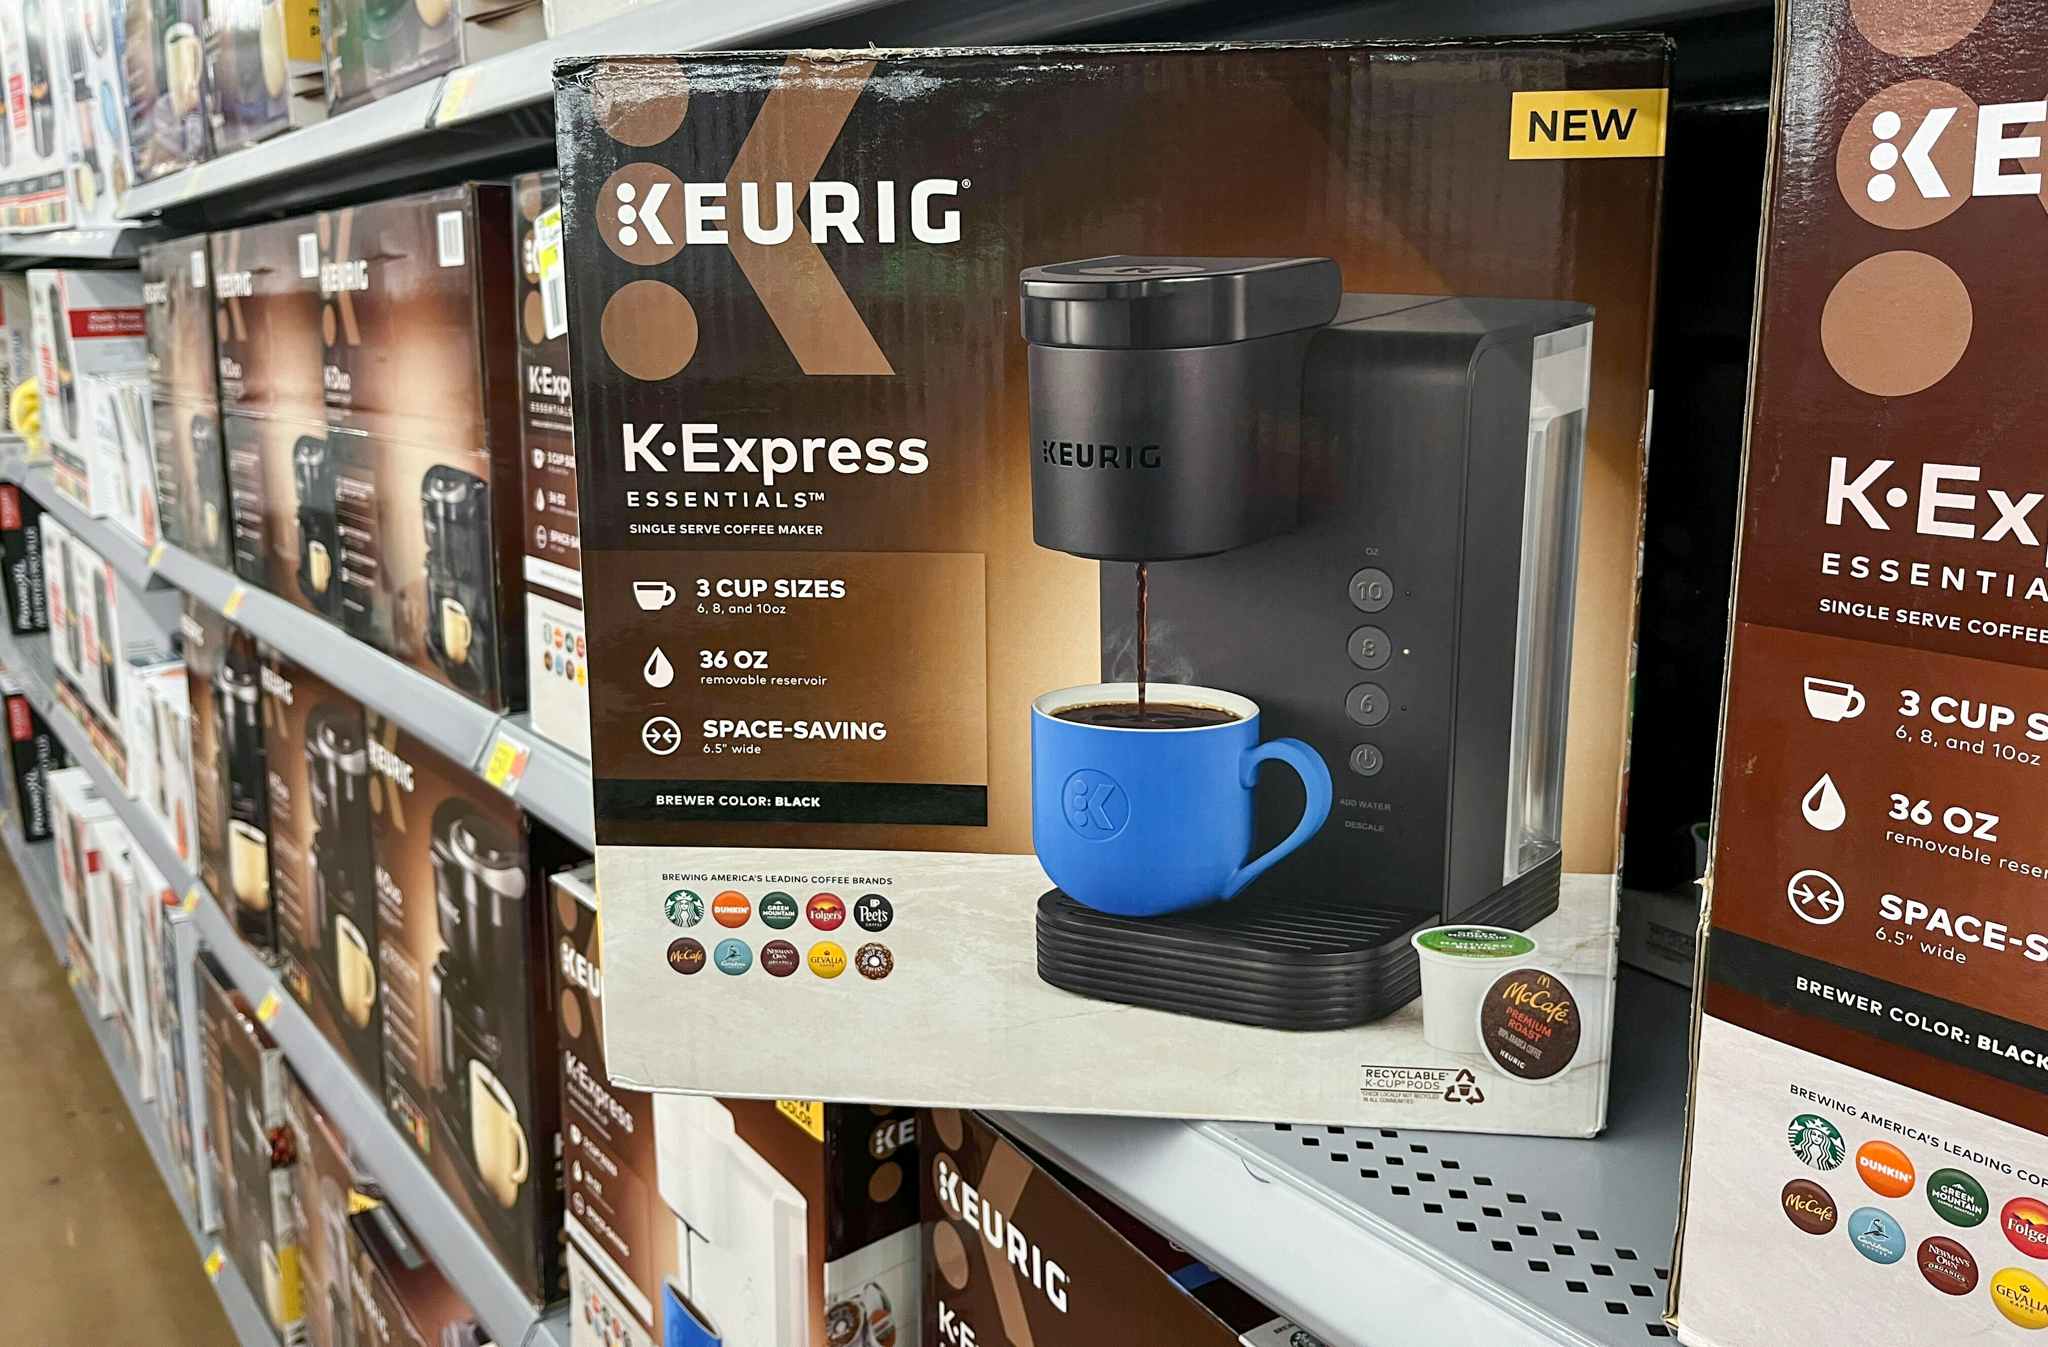 Keurig Black Friday 2022 deals: Coffee makers, K-Cups, more